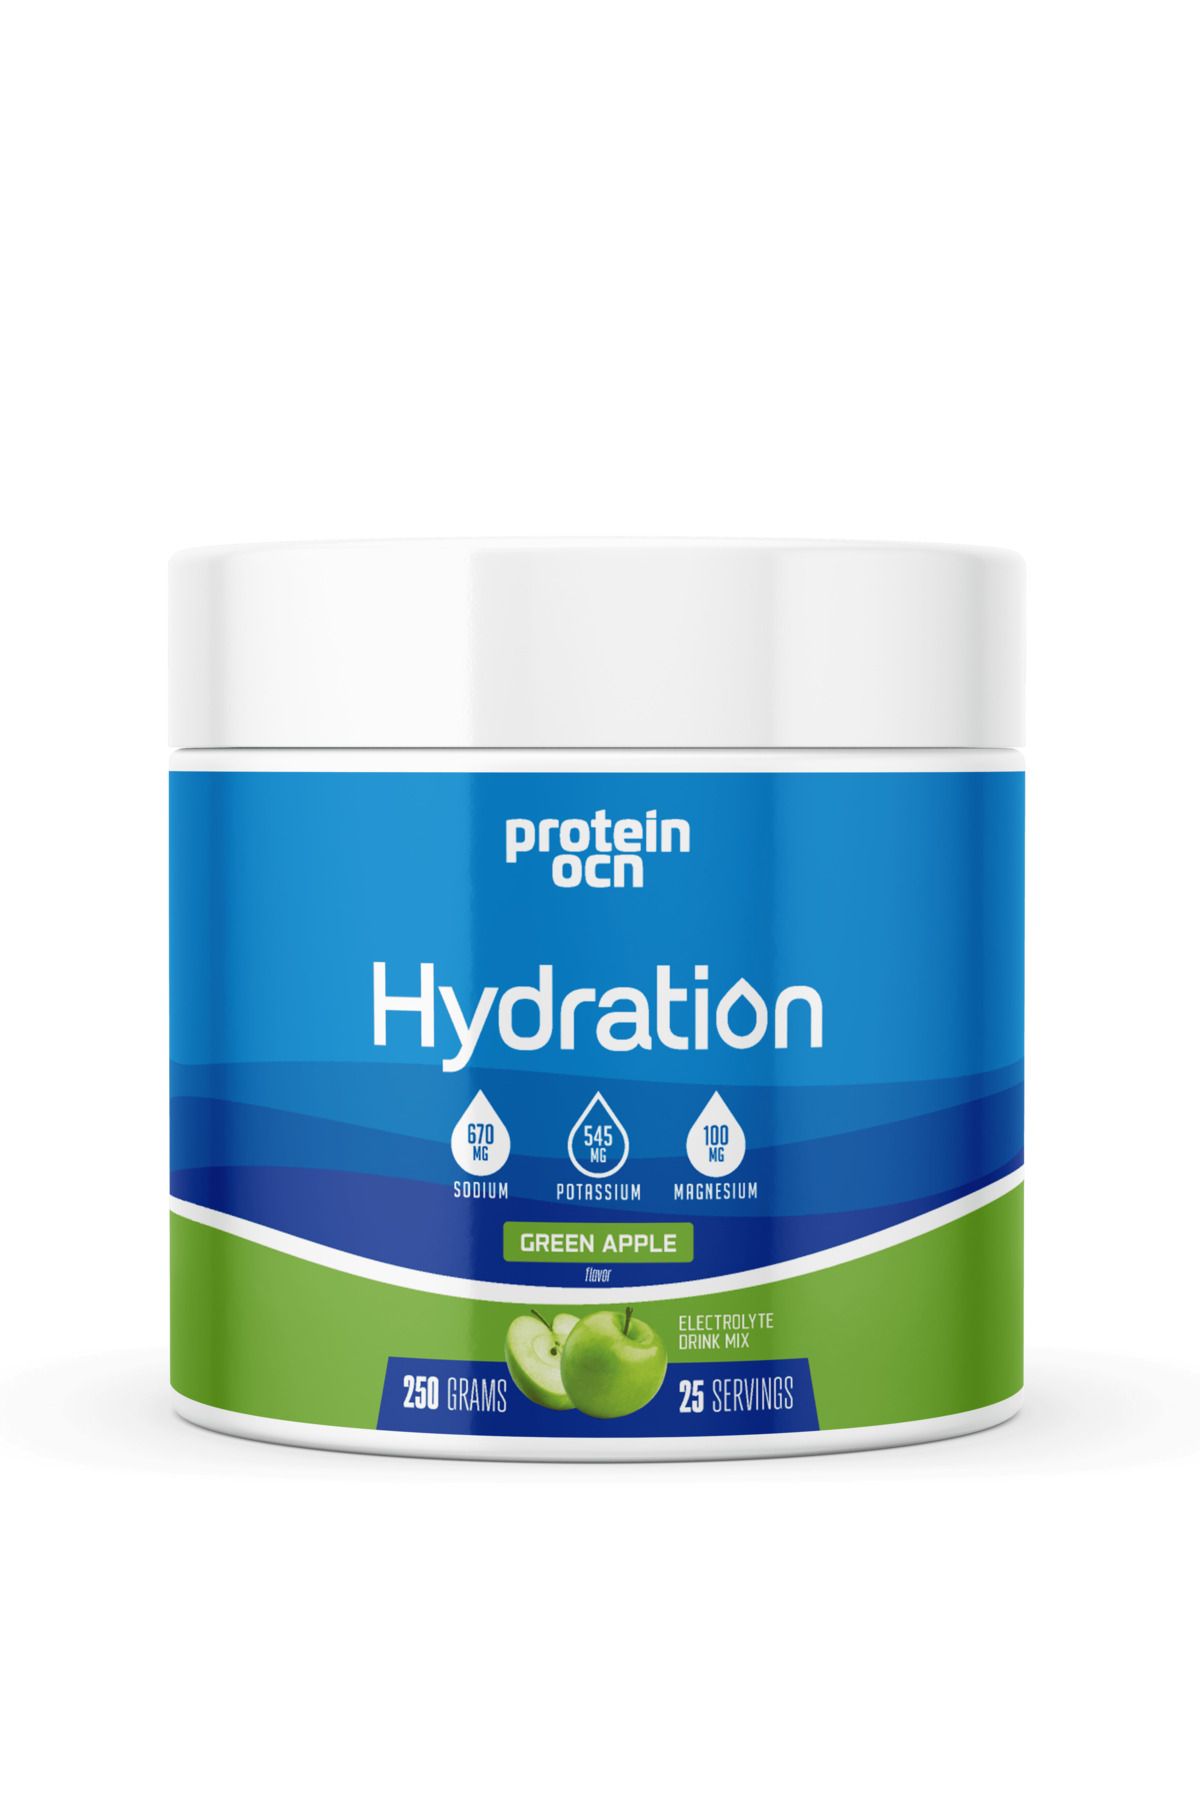 Proteinocean Hydration - Yeşil Elma - 250g - 25 servis